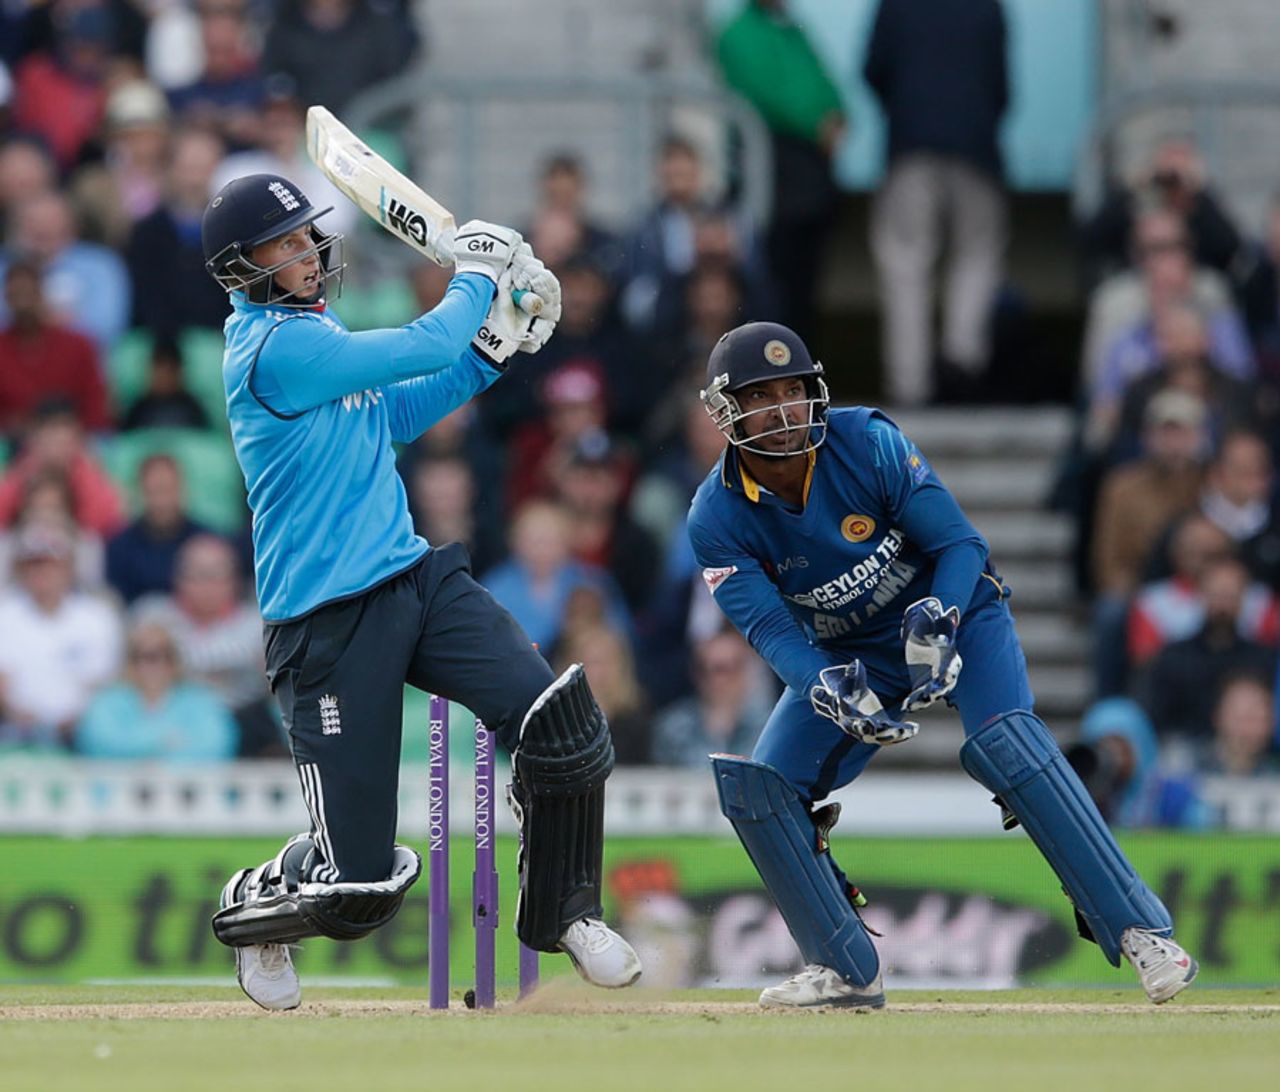 Joe Root made a handy 45 in 41 balls, England v Sri Lanka, 1st ODI, The Oval, May 22, 2014